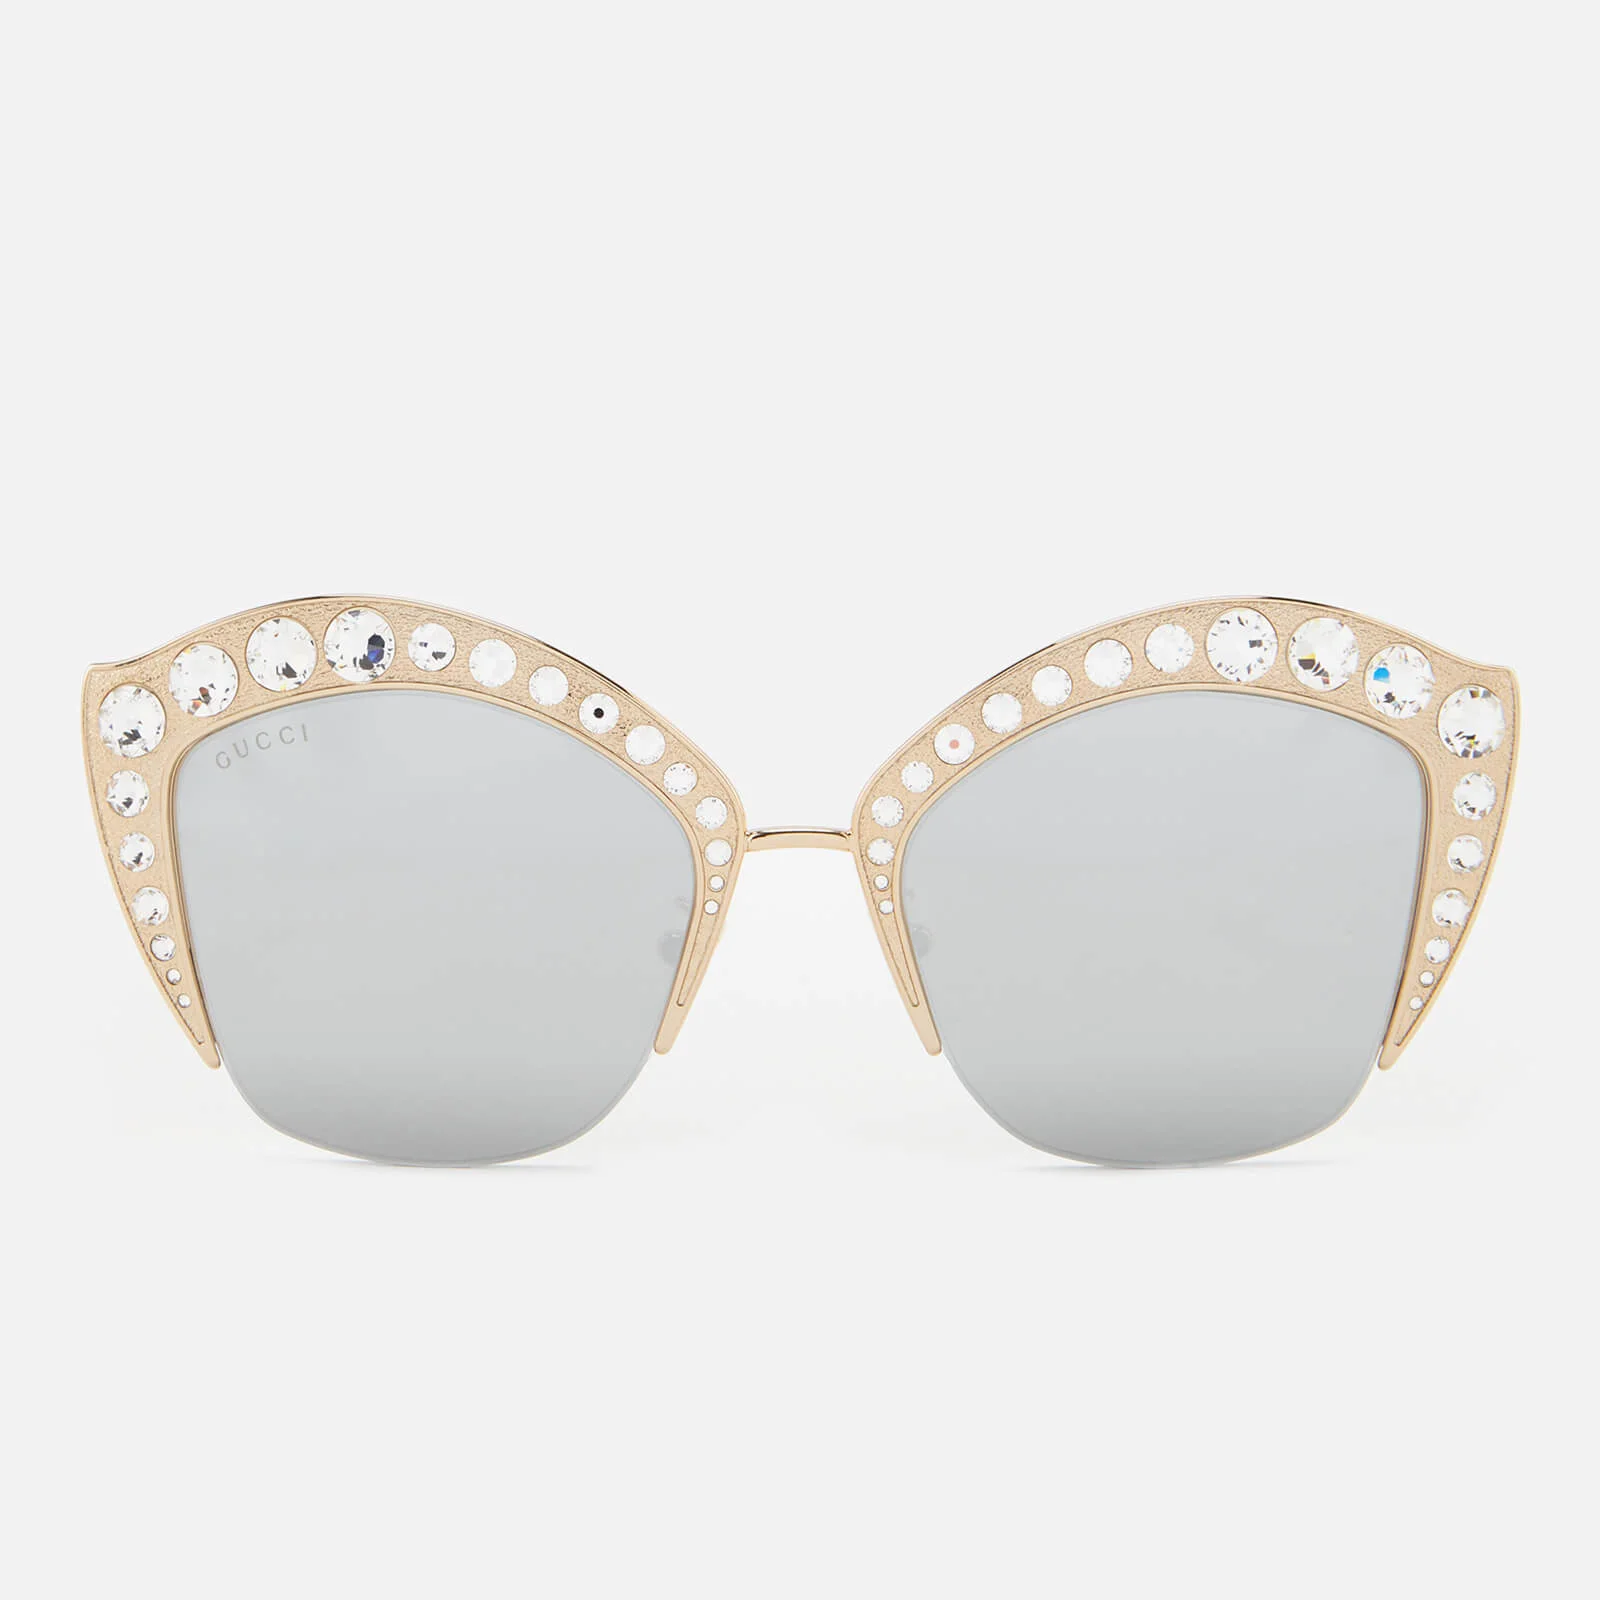 Gucci Women's Cat Eye Sunglasses - Gold/Silver Image 1